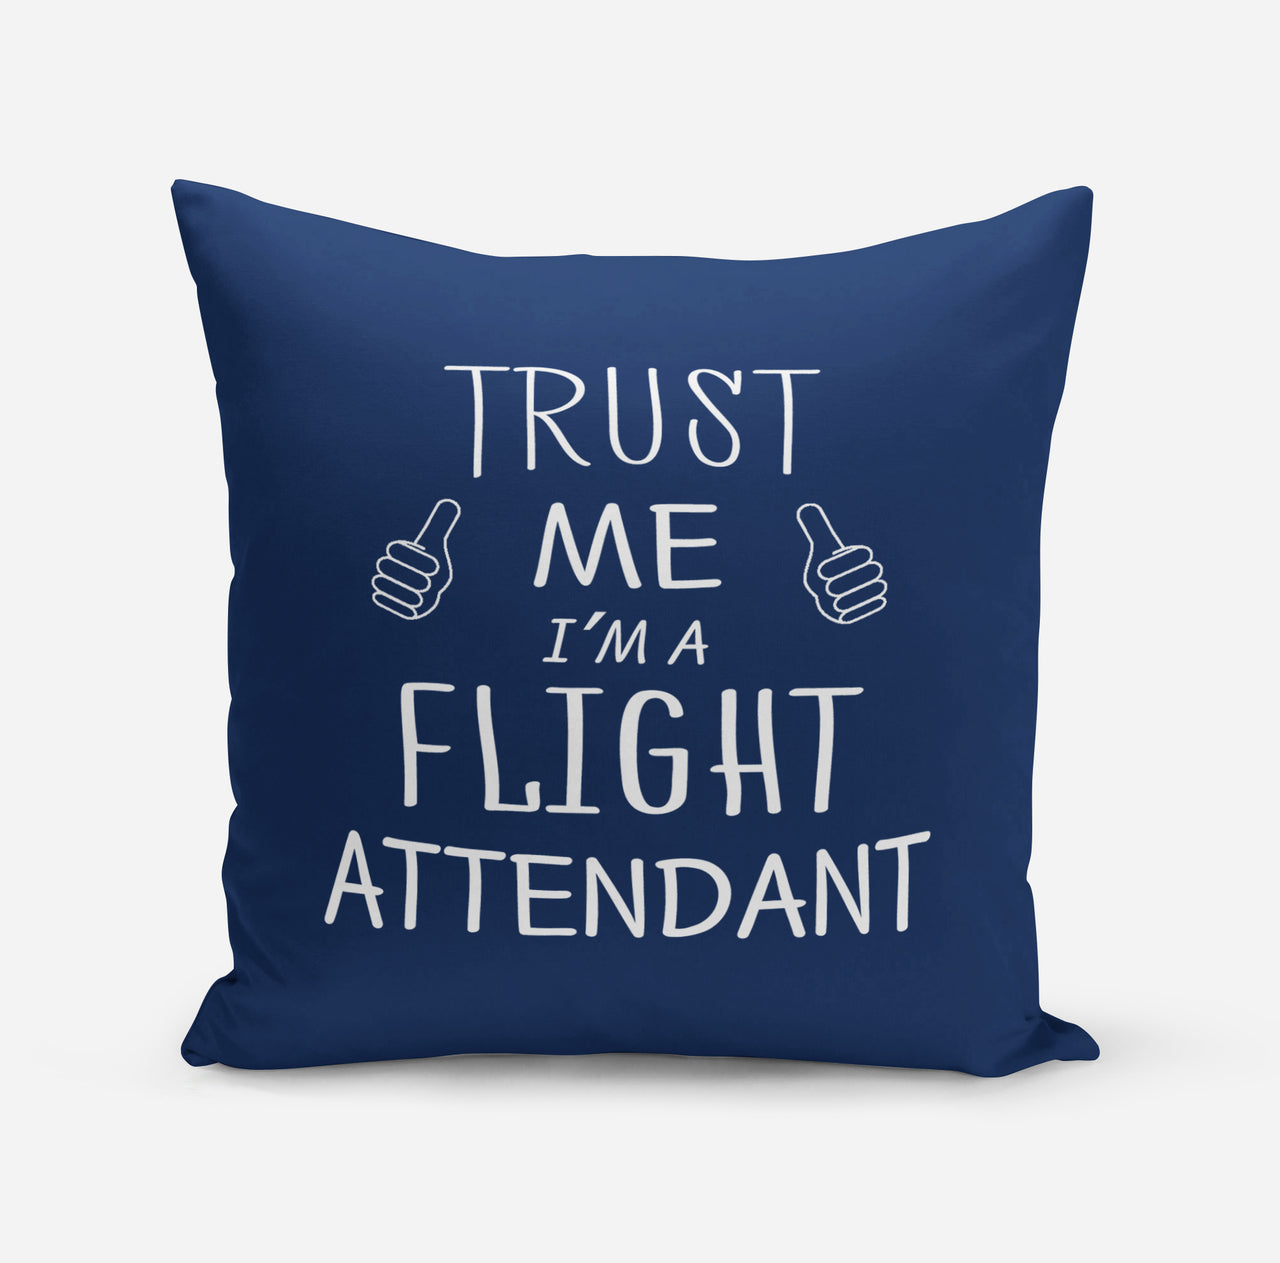 Trust Me I'm a Flight Attendant Designed Pillows